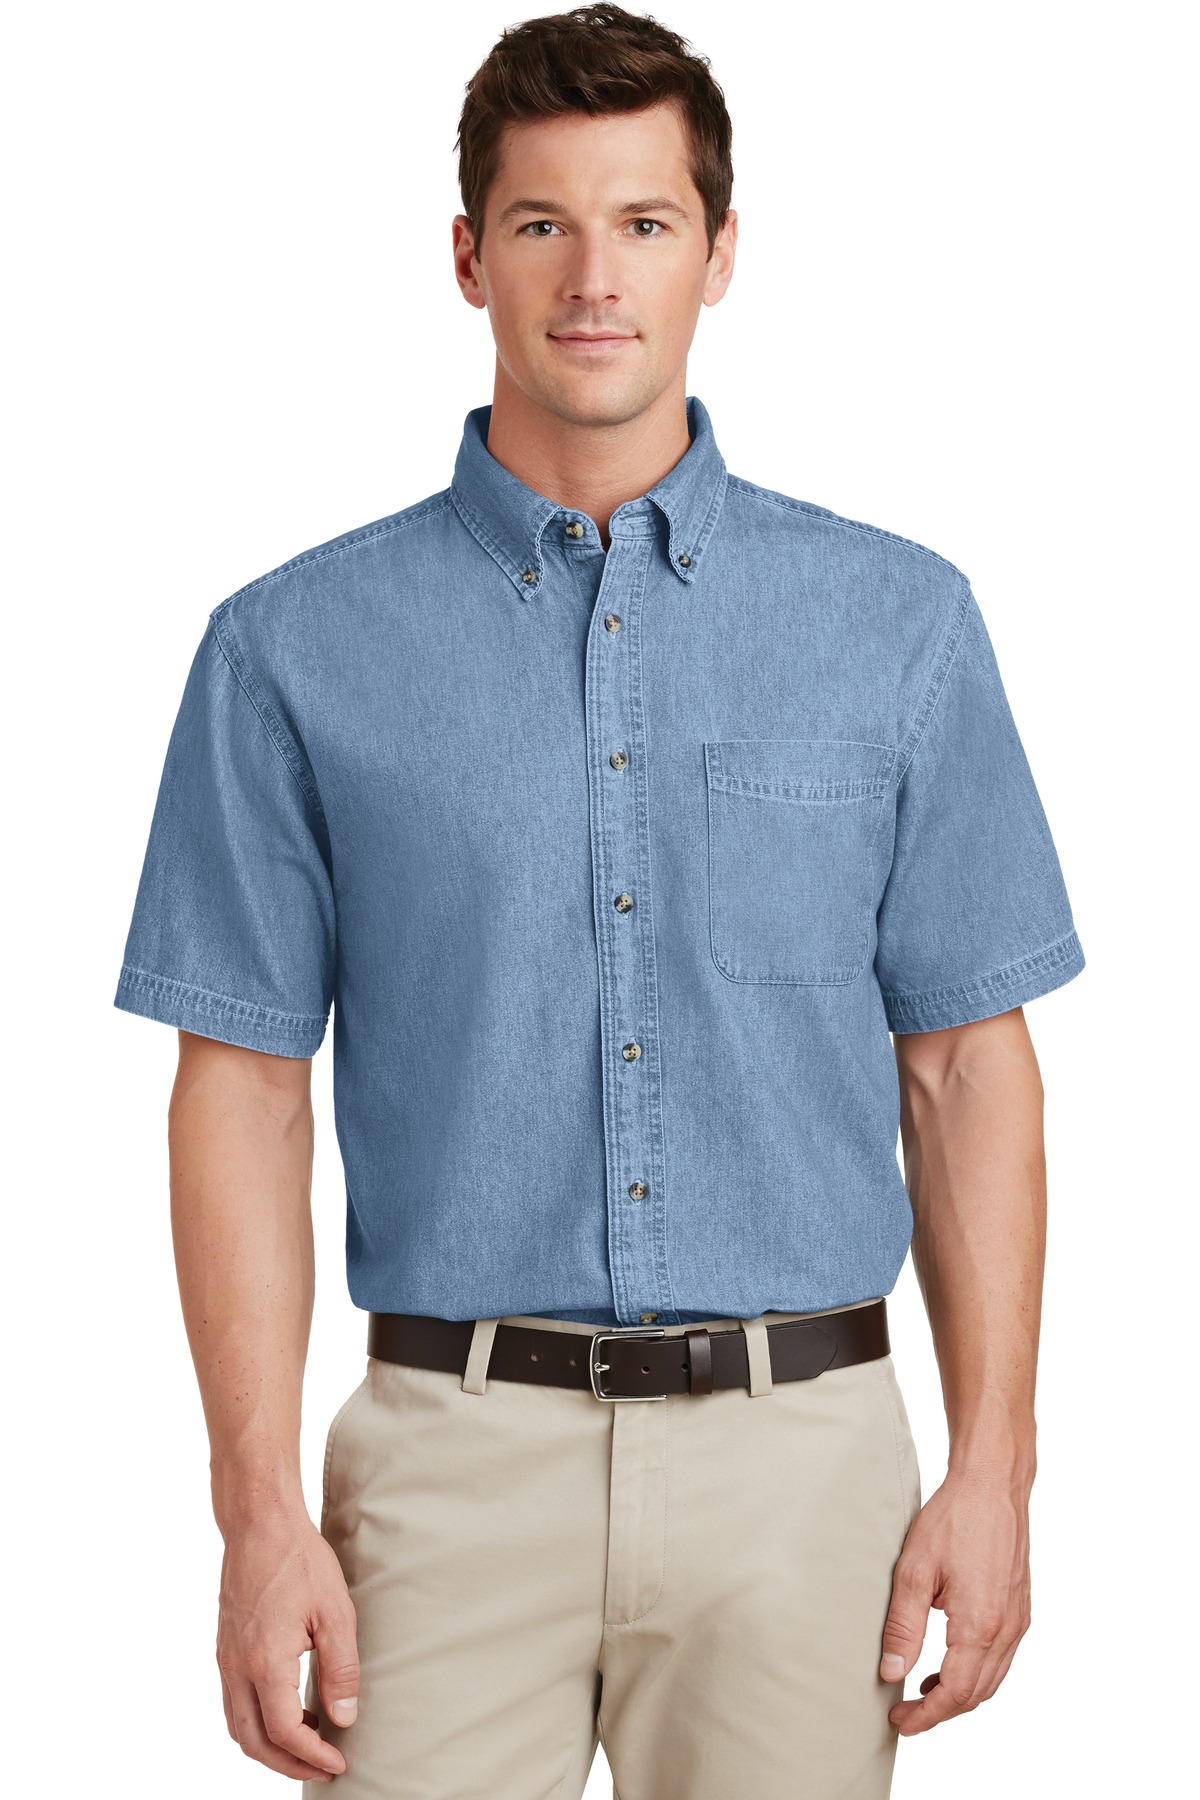 Front view of Short Sleeve Value Denim Shirt